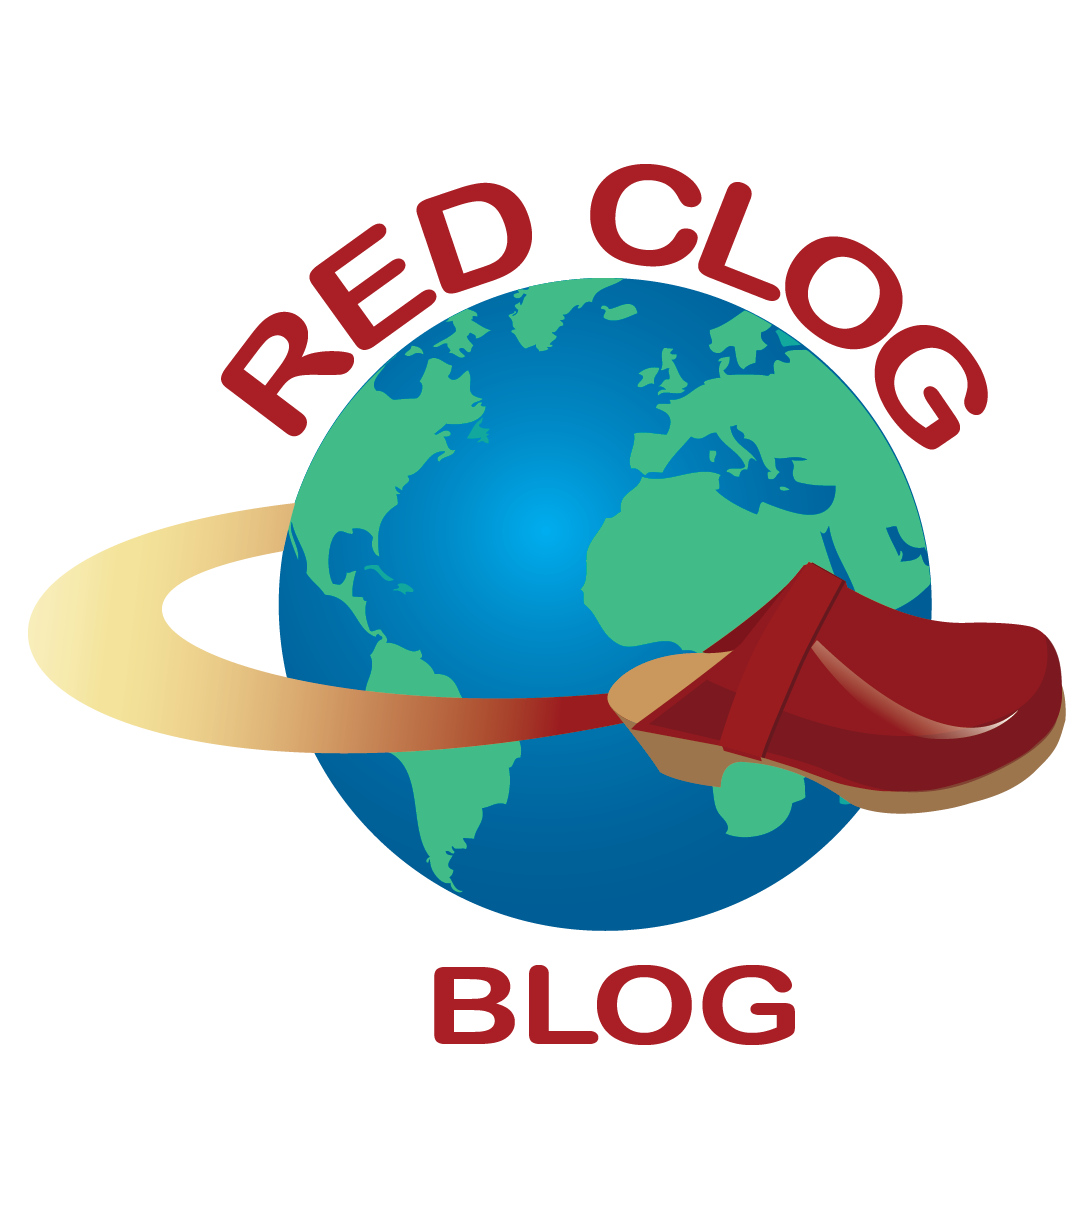 Uncategorized red clog blog. Smell clipart foot powder